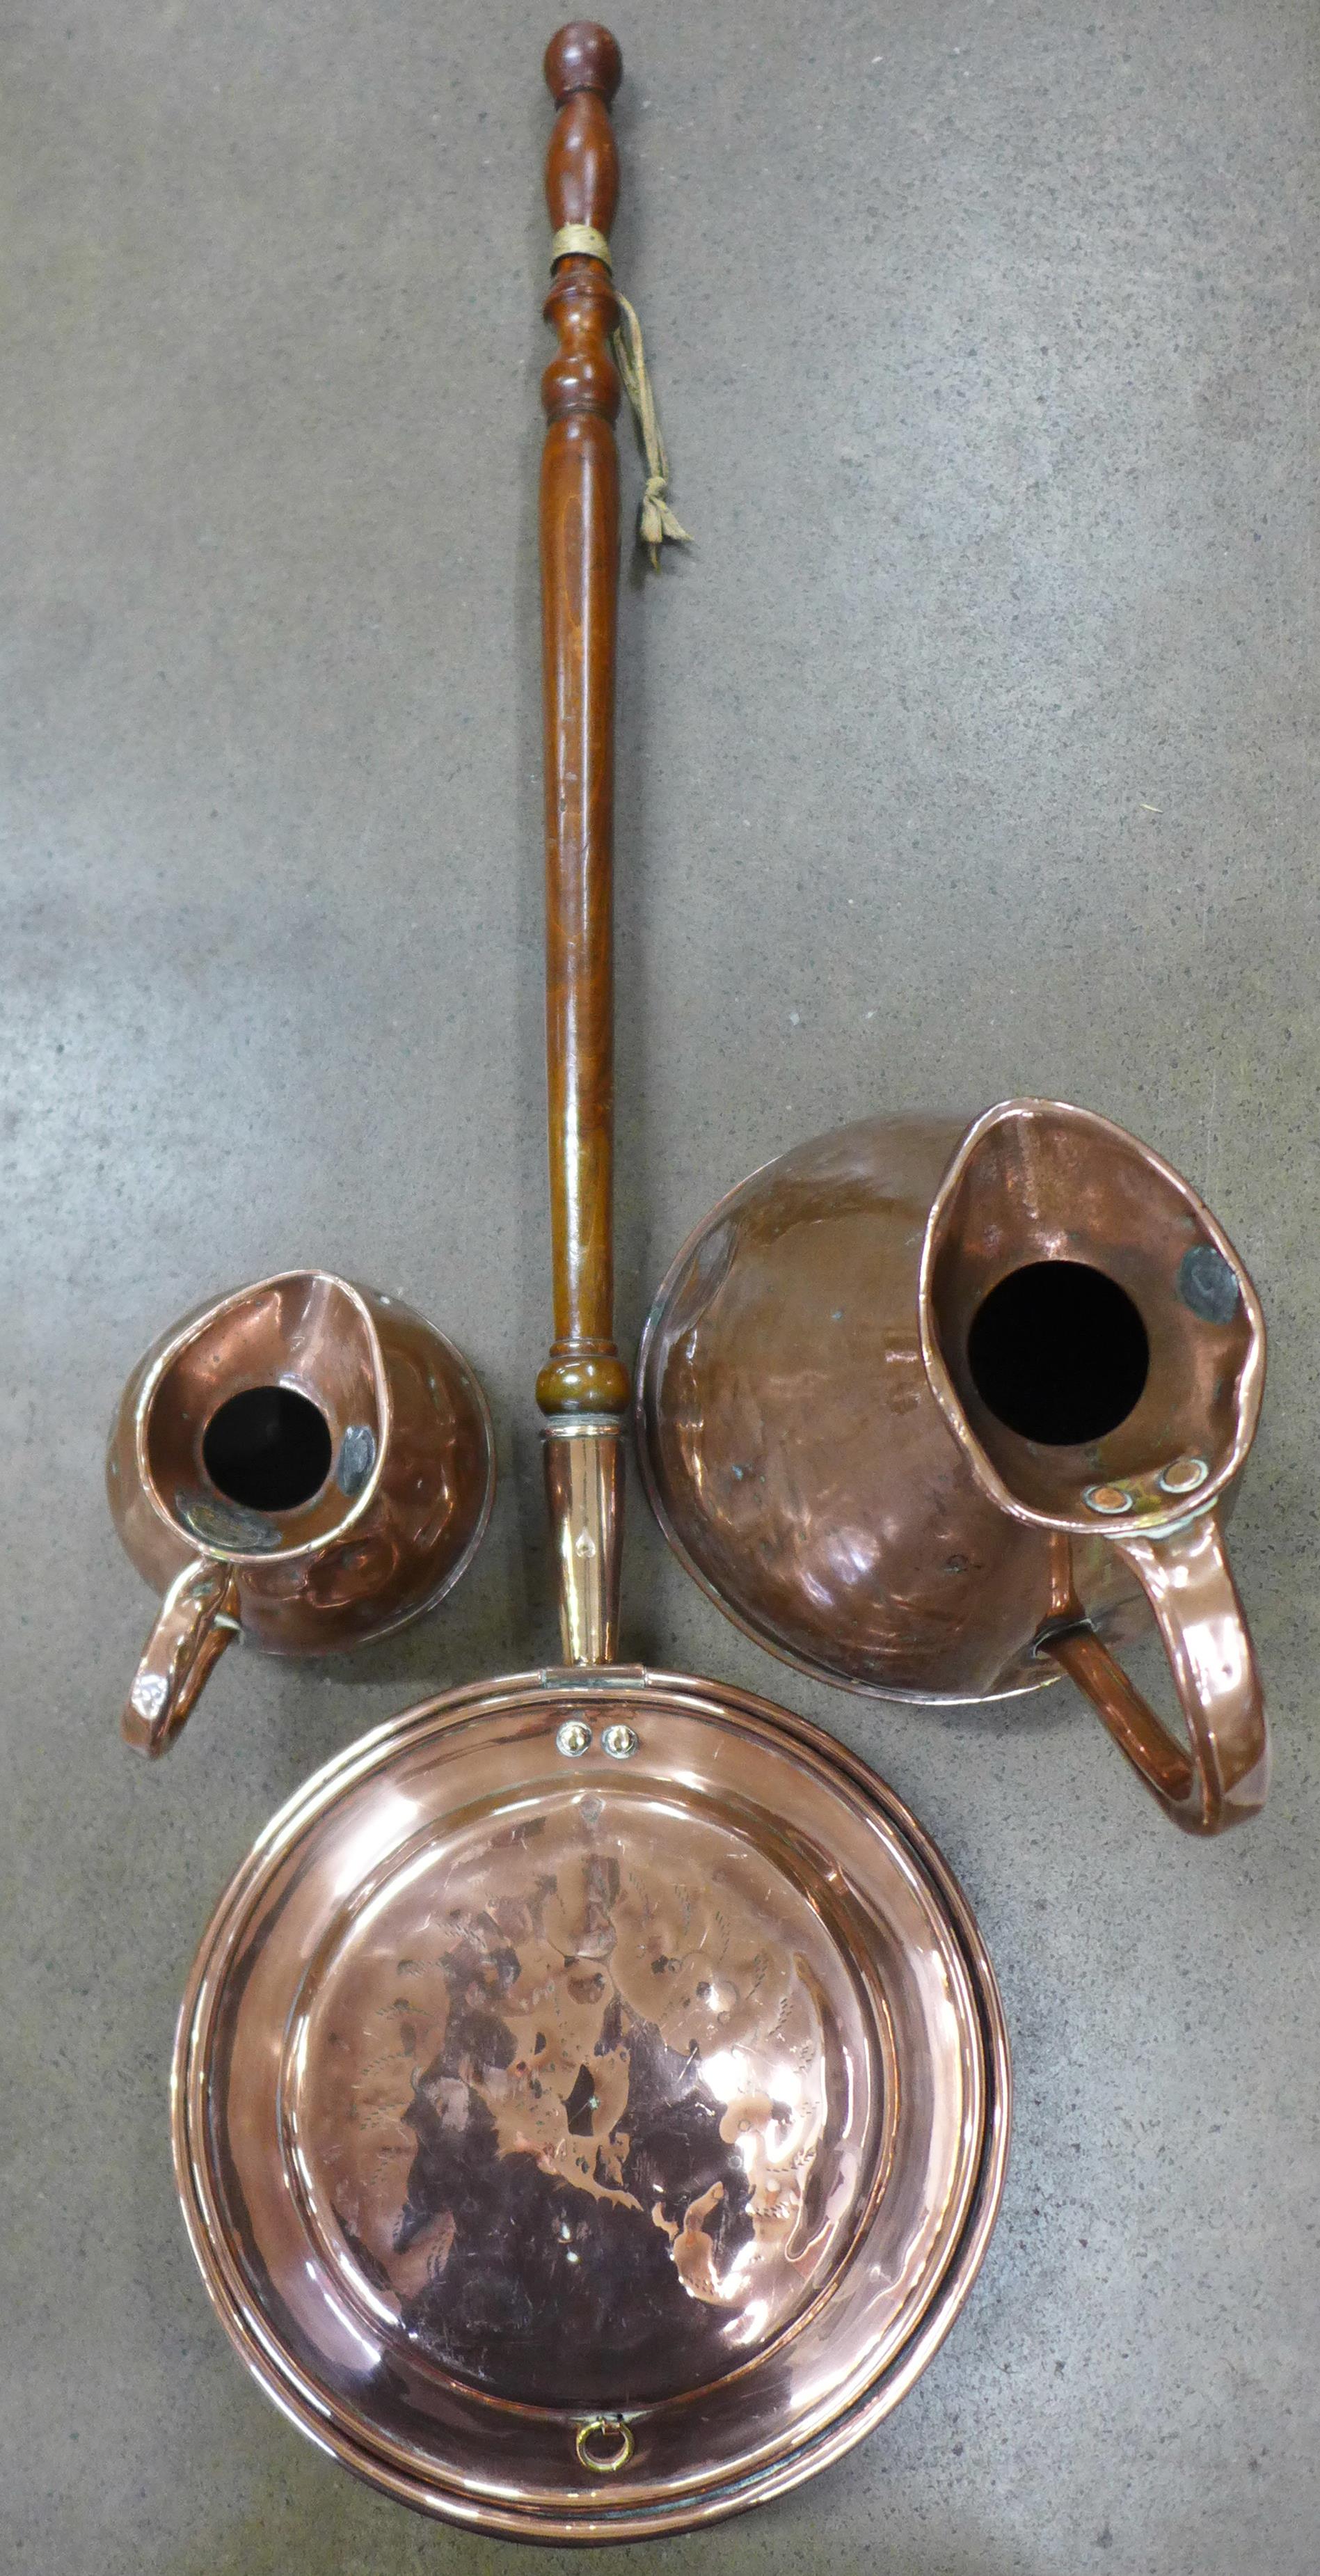 A copper flagon, Imperial 1 gallon and a smaller copper flagon and a copper warming pan